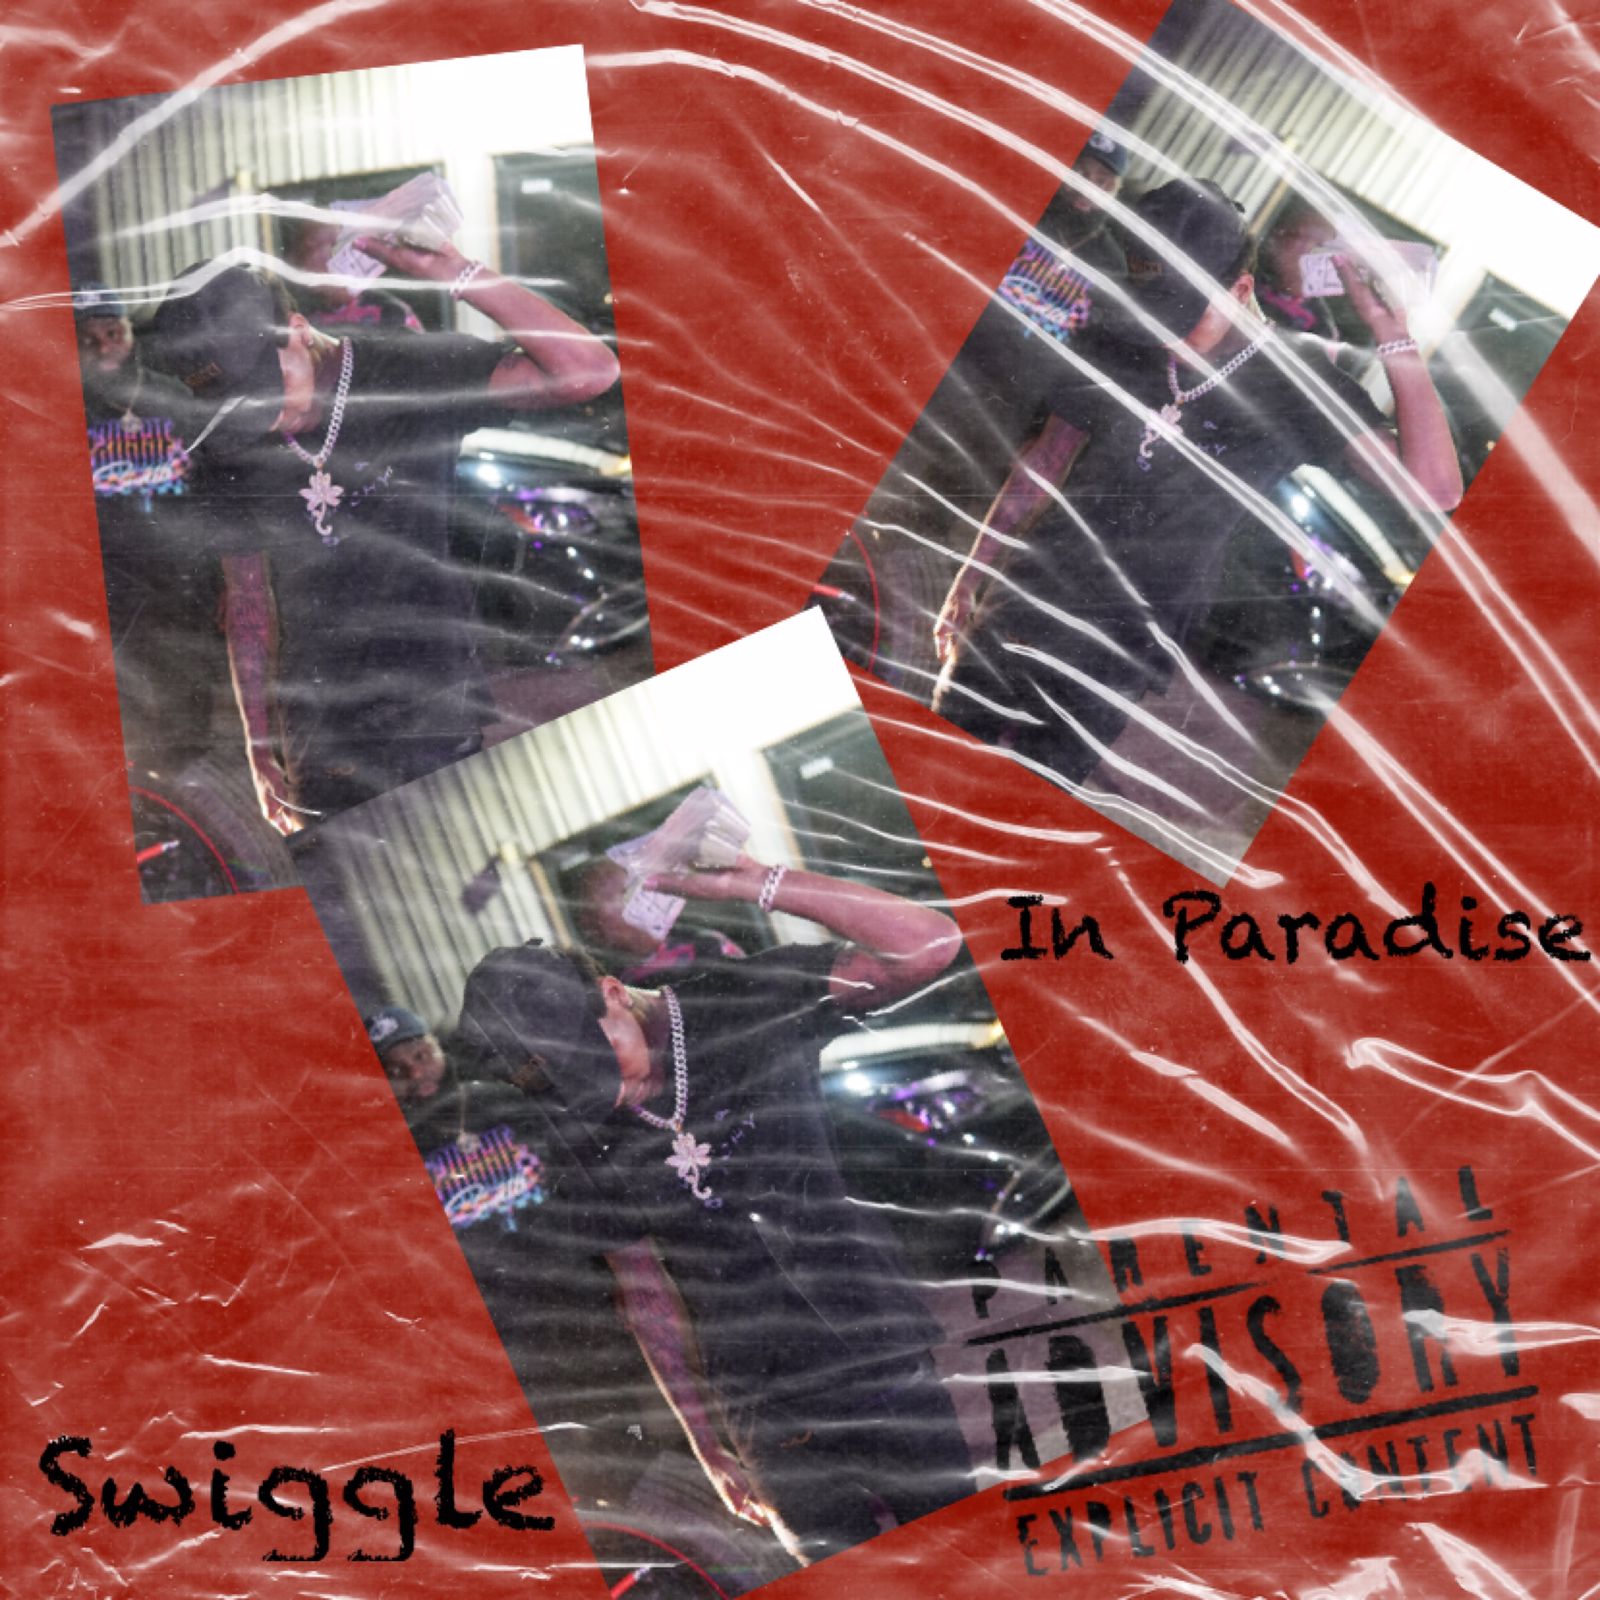 [New Music] Swiggle – In Paradise